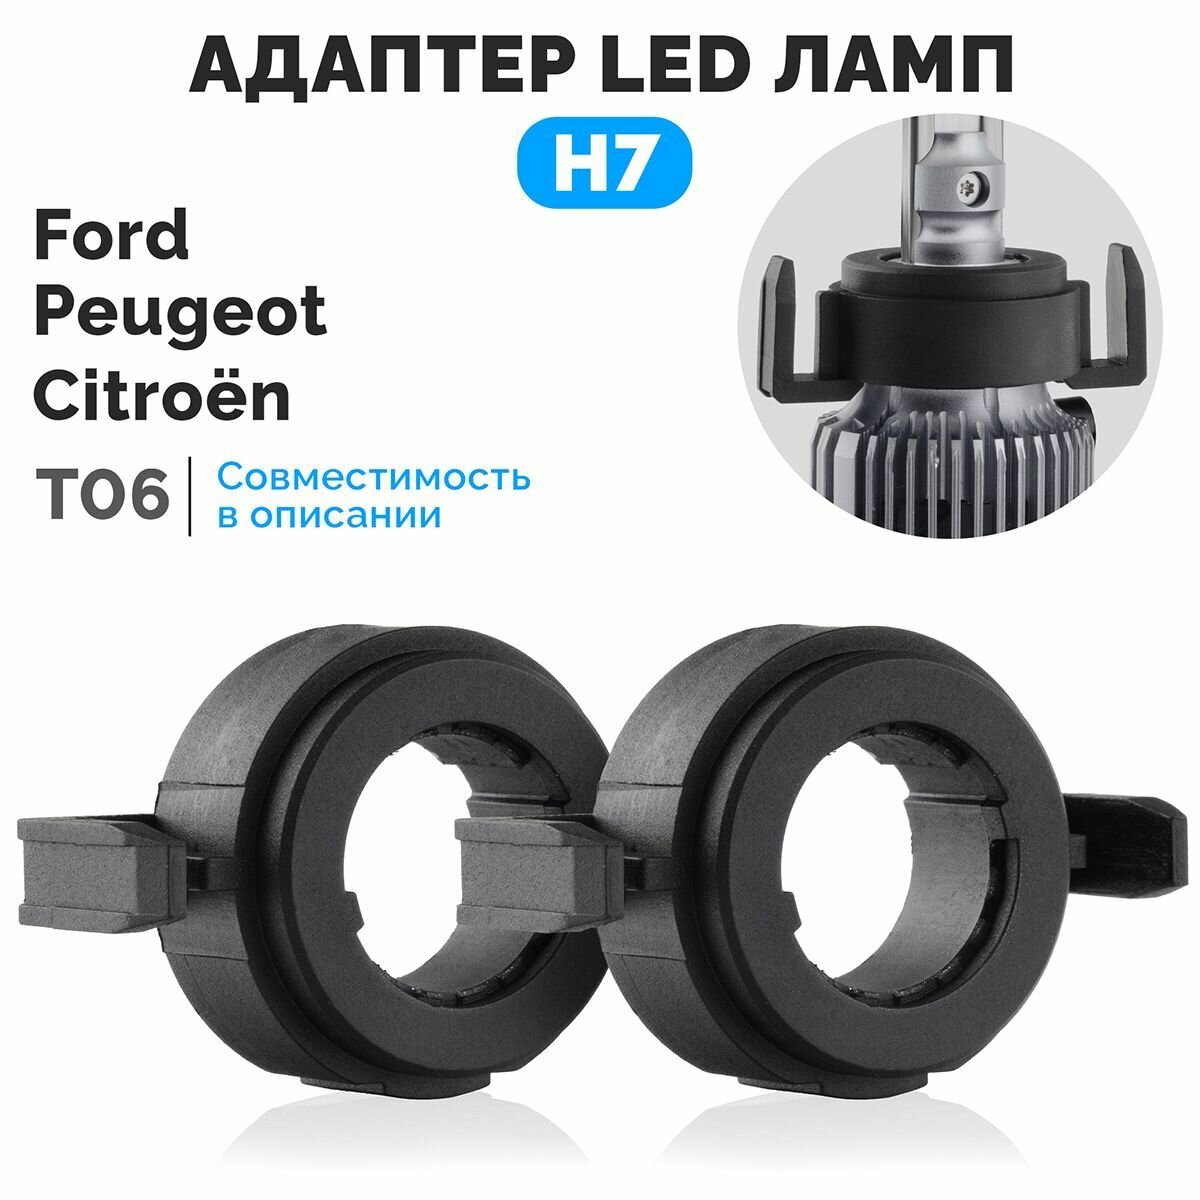 Адаптеры для установки LED ламп H7 ElectroKot PRO на Peugeot Citroen Ford T6 - комплект